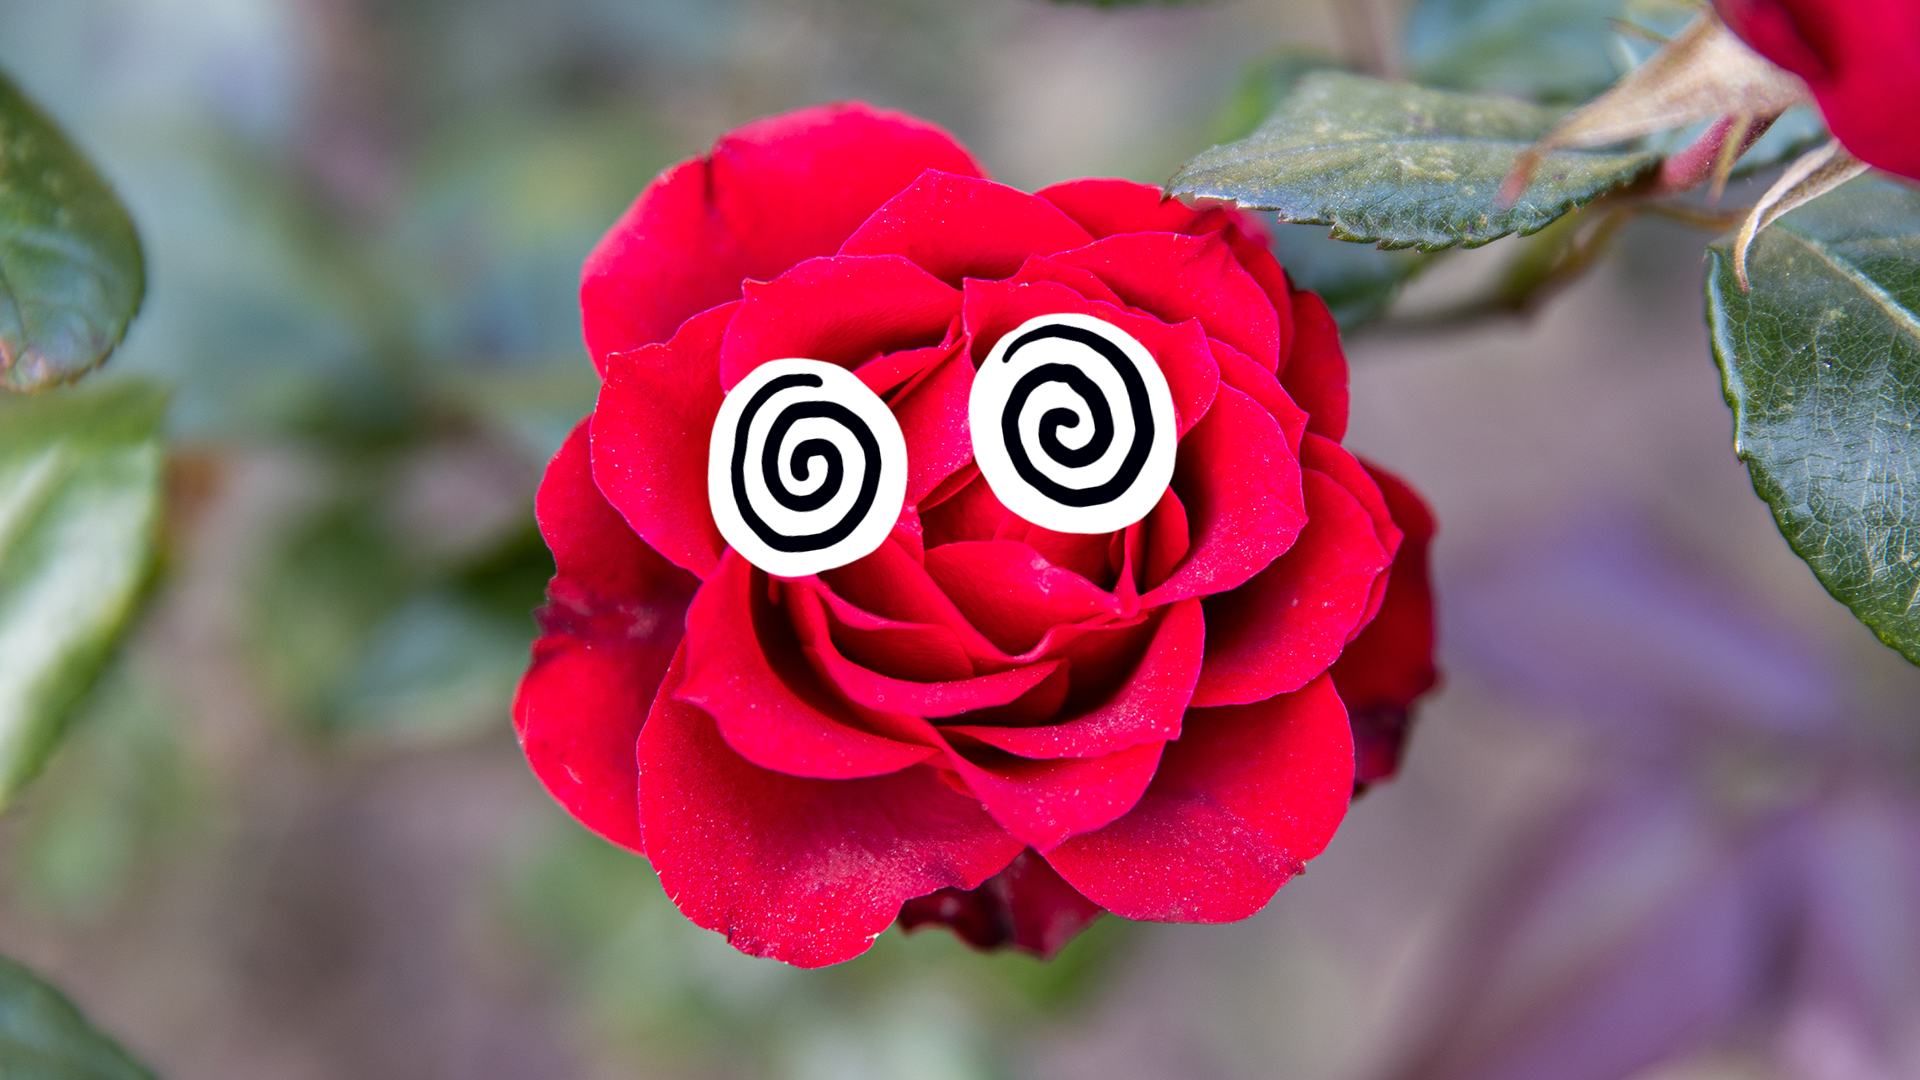 A hypnotised rose 